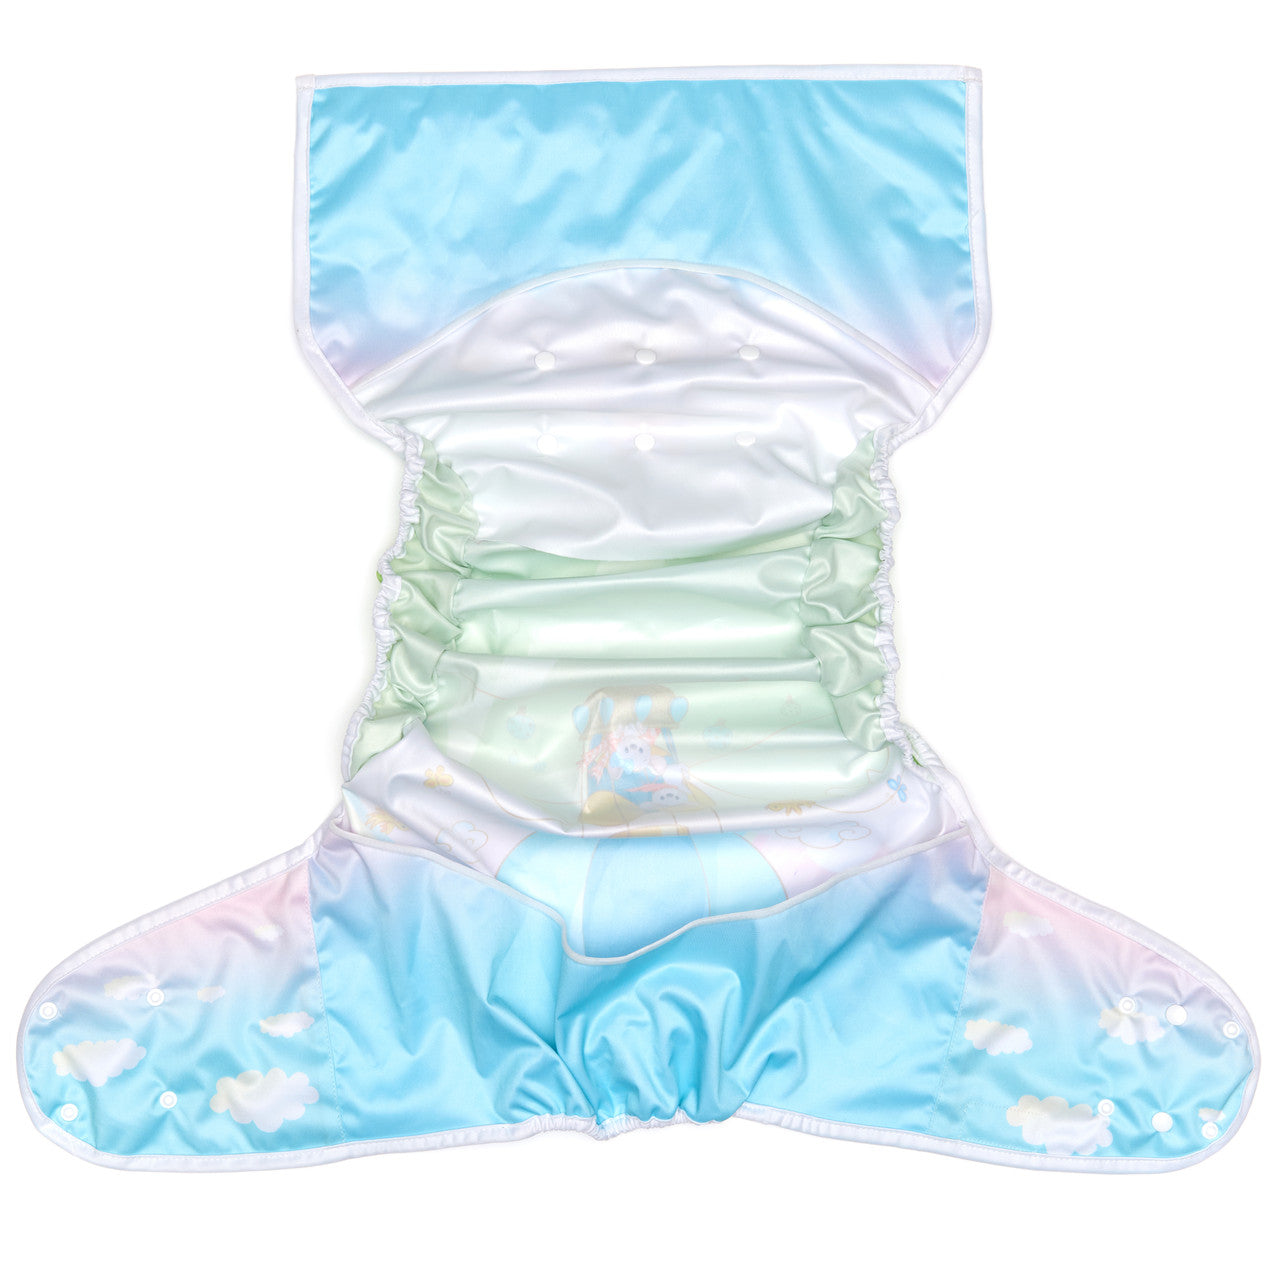 Rearz - Adult Diaper Cover/Wrap - Daydreamer